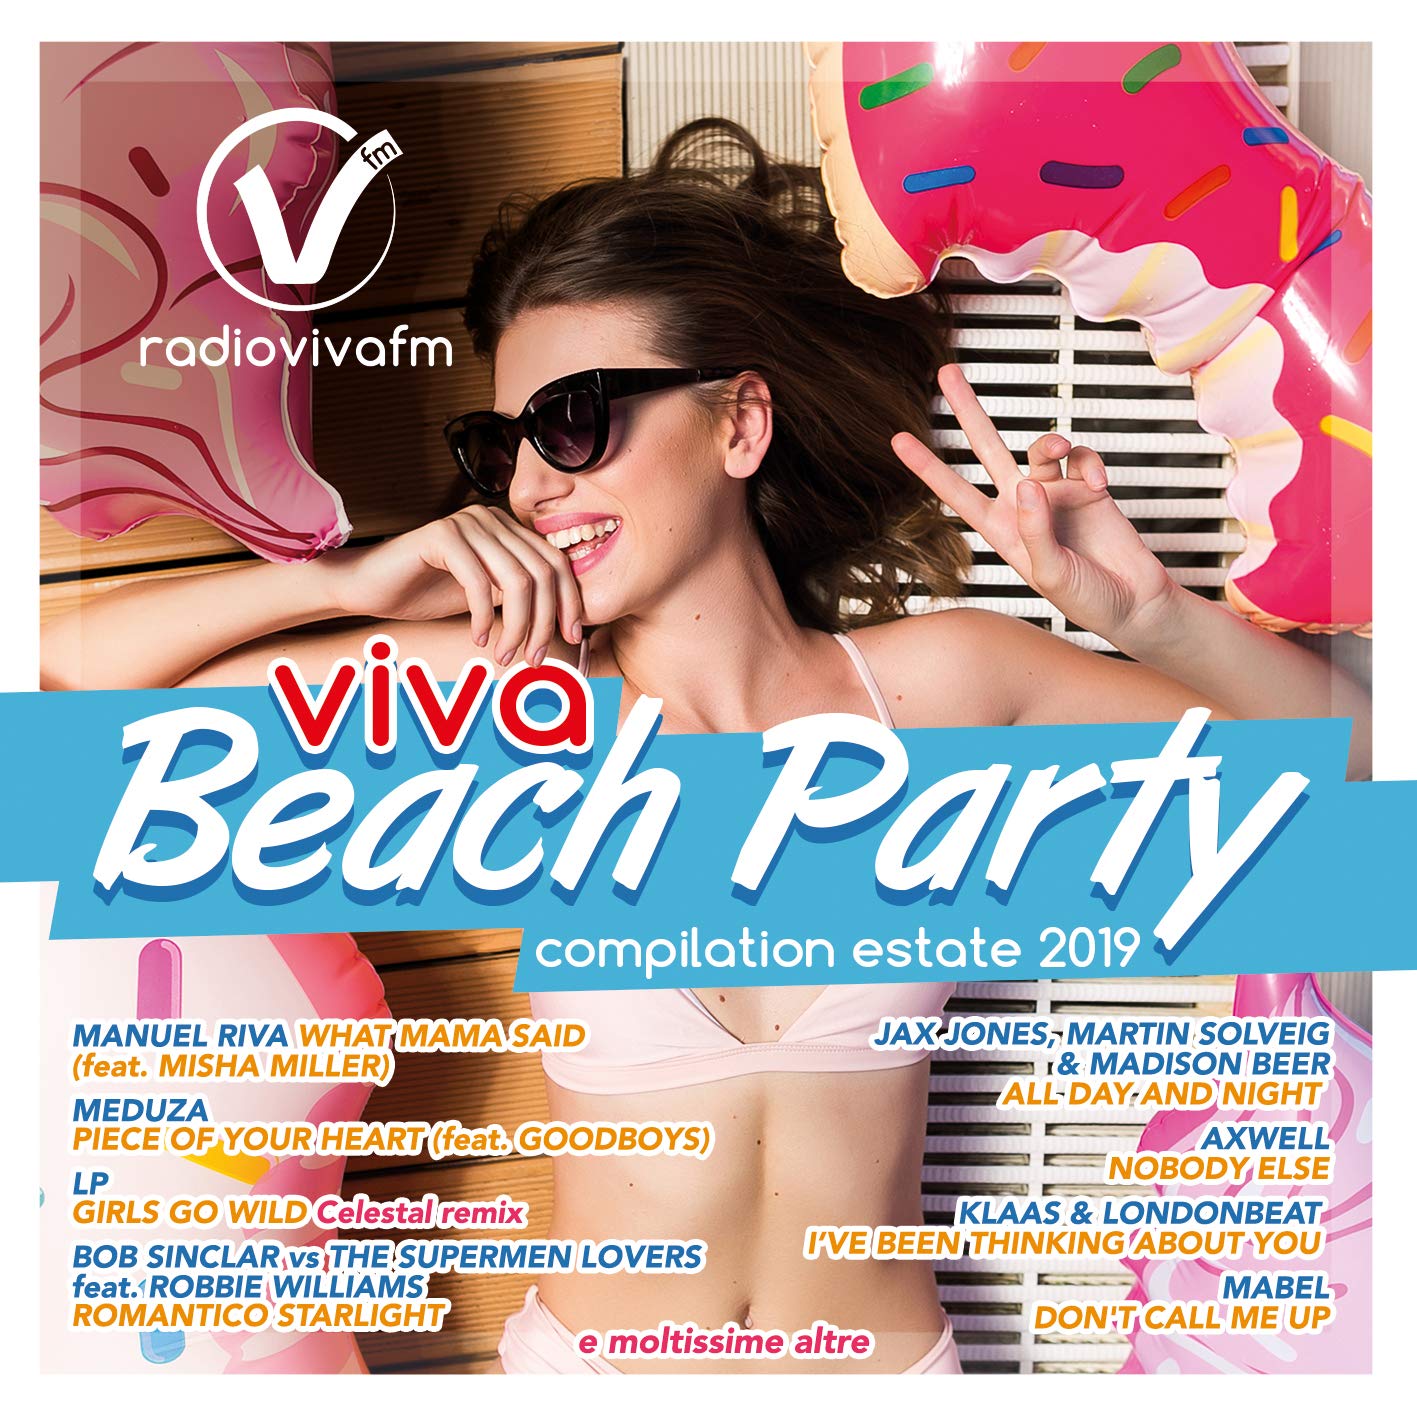 VIVA BEACH PARTY COMPILATION ESTATE 2019